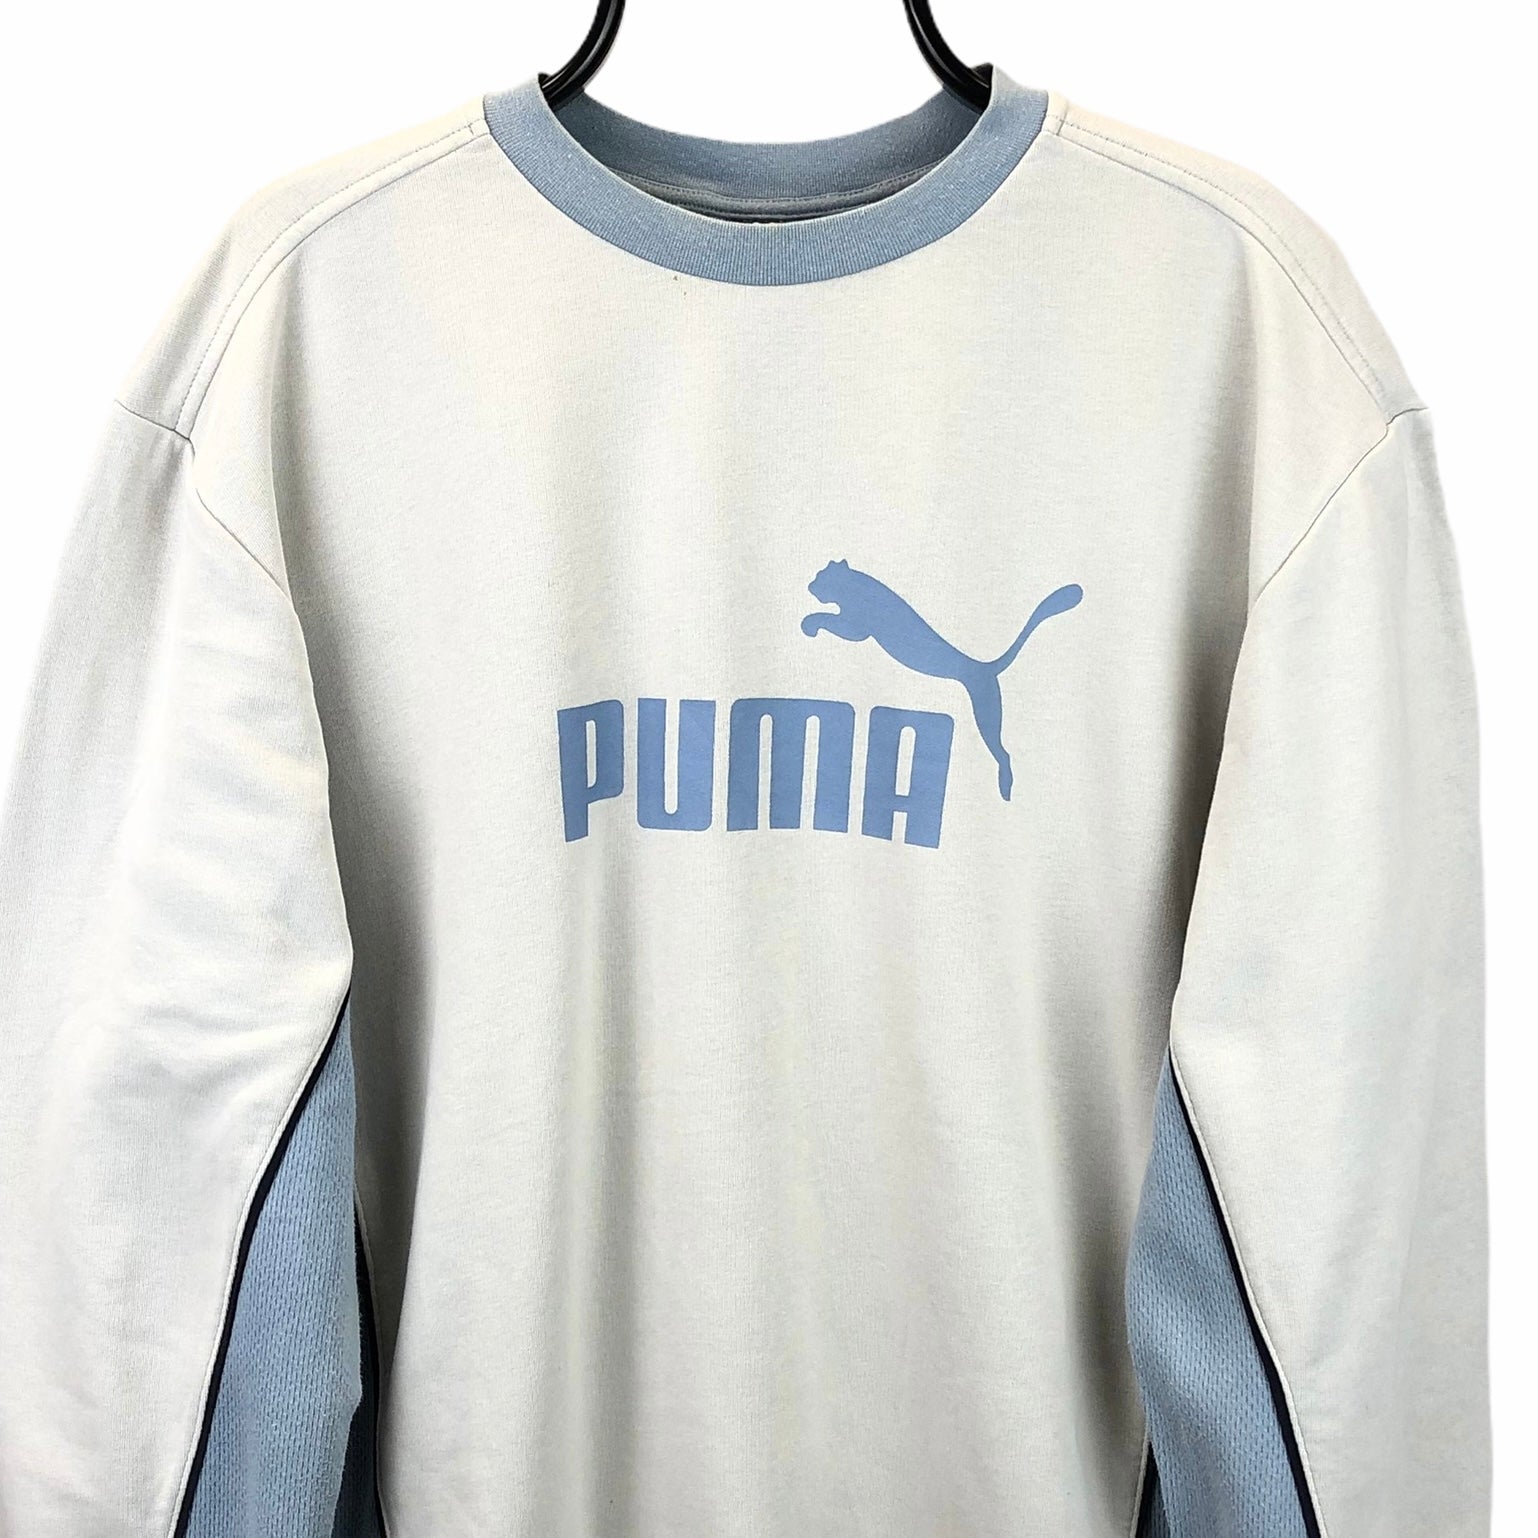 Vintage 90s Puma Spellout Sweatshirt in Cream/Baby Blue - Men's Large/Women's XL